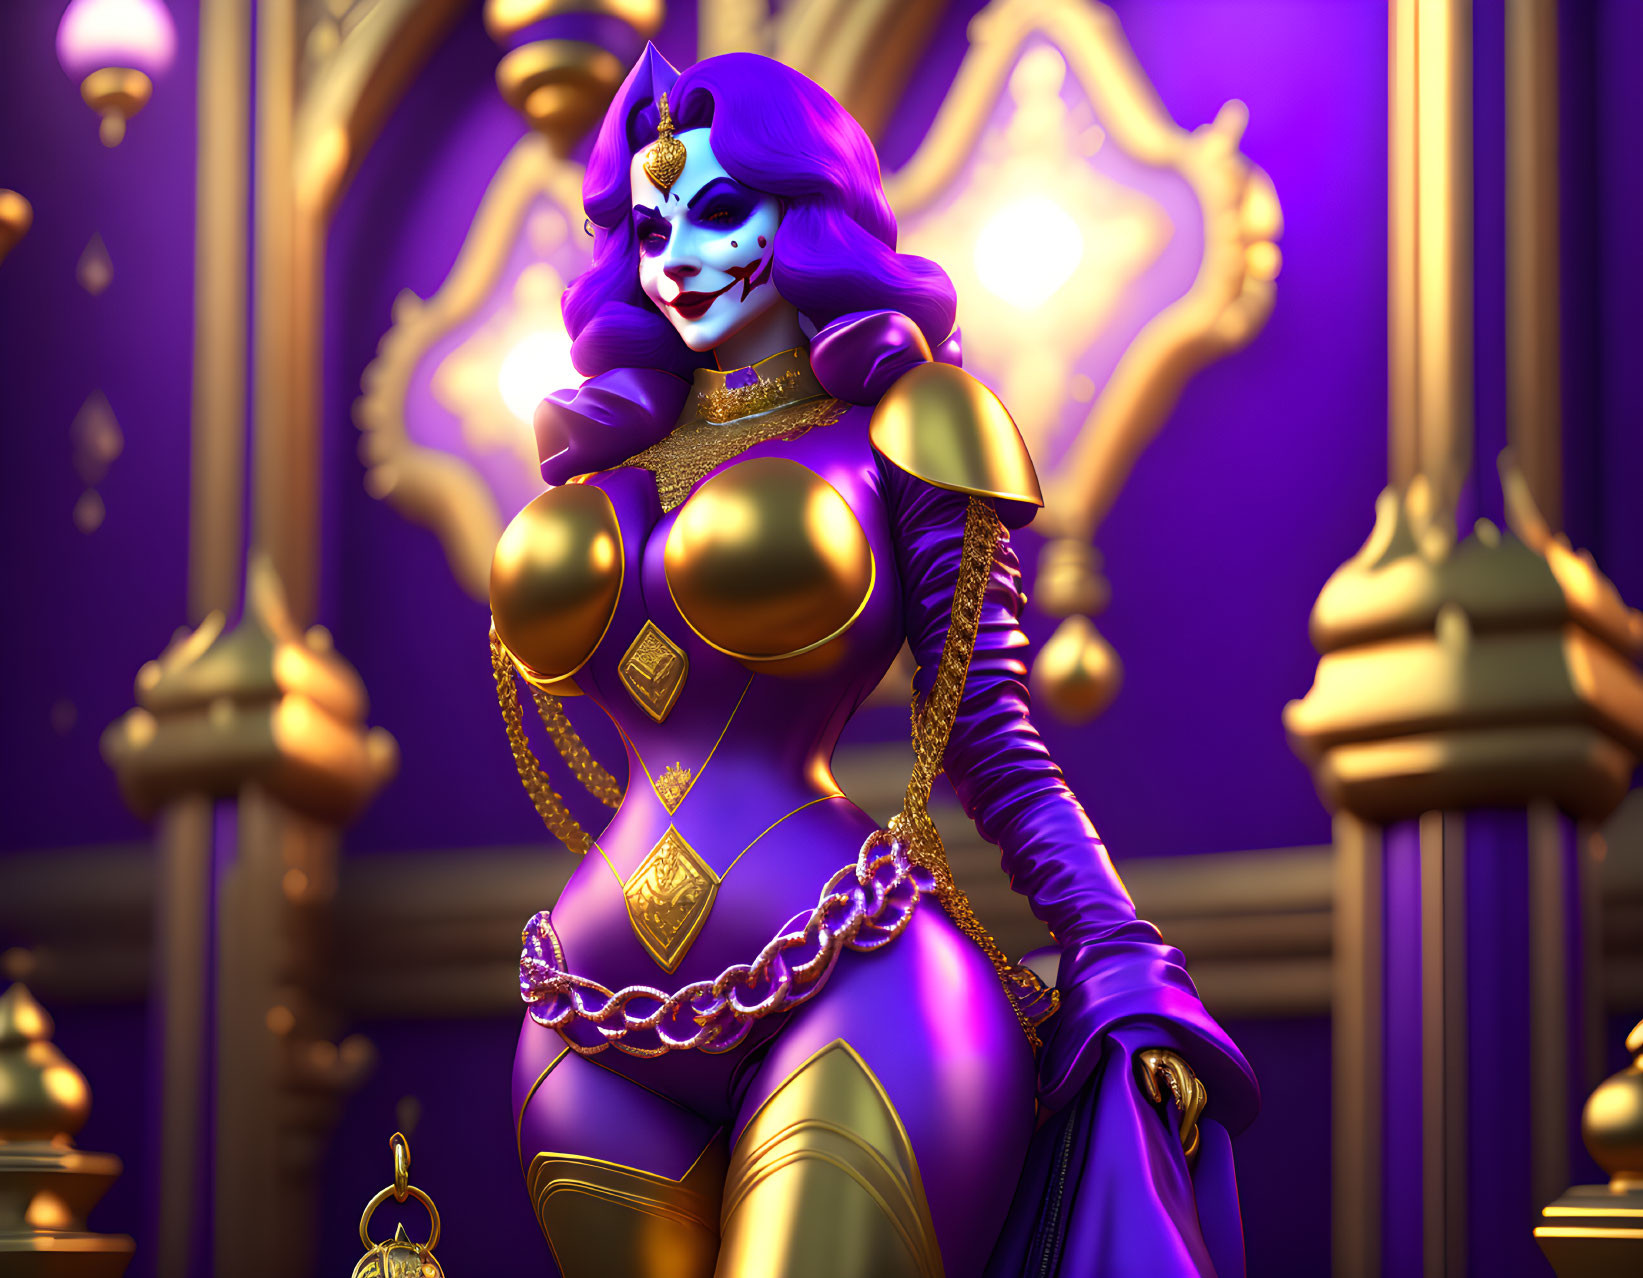 Purple-skinned fantasy queen in golden armor and jewelry, standing among golden pillars